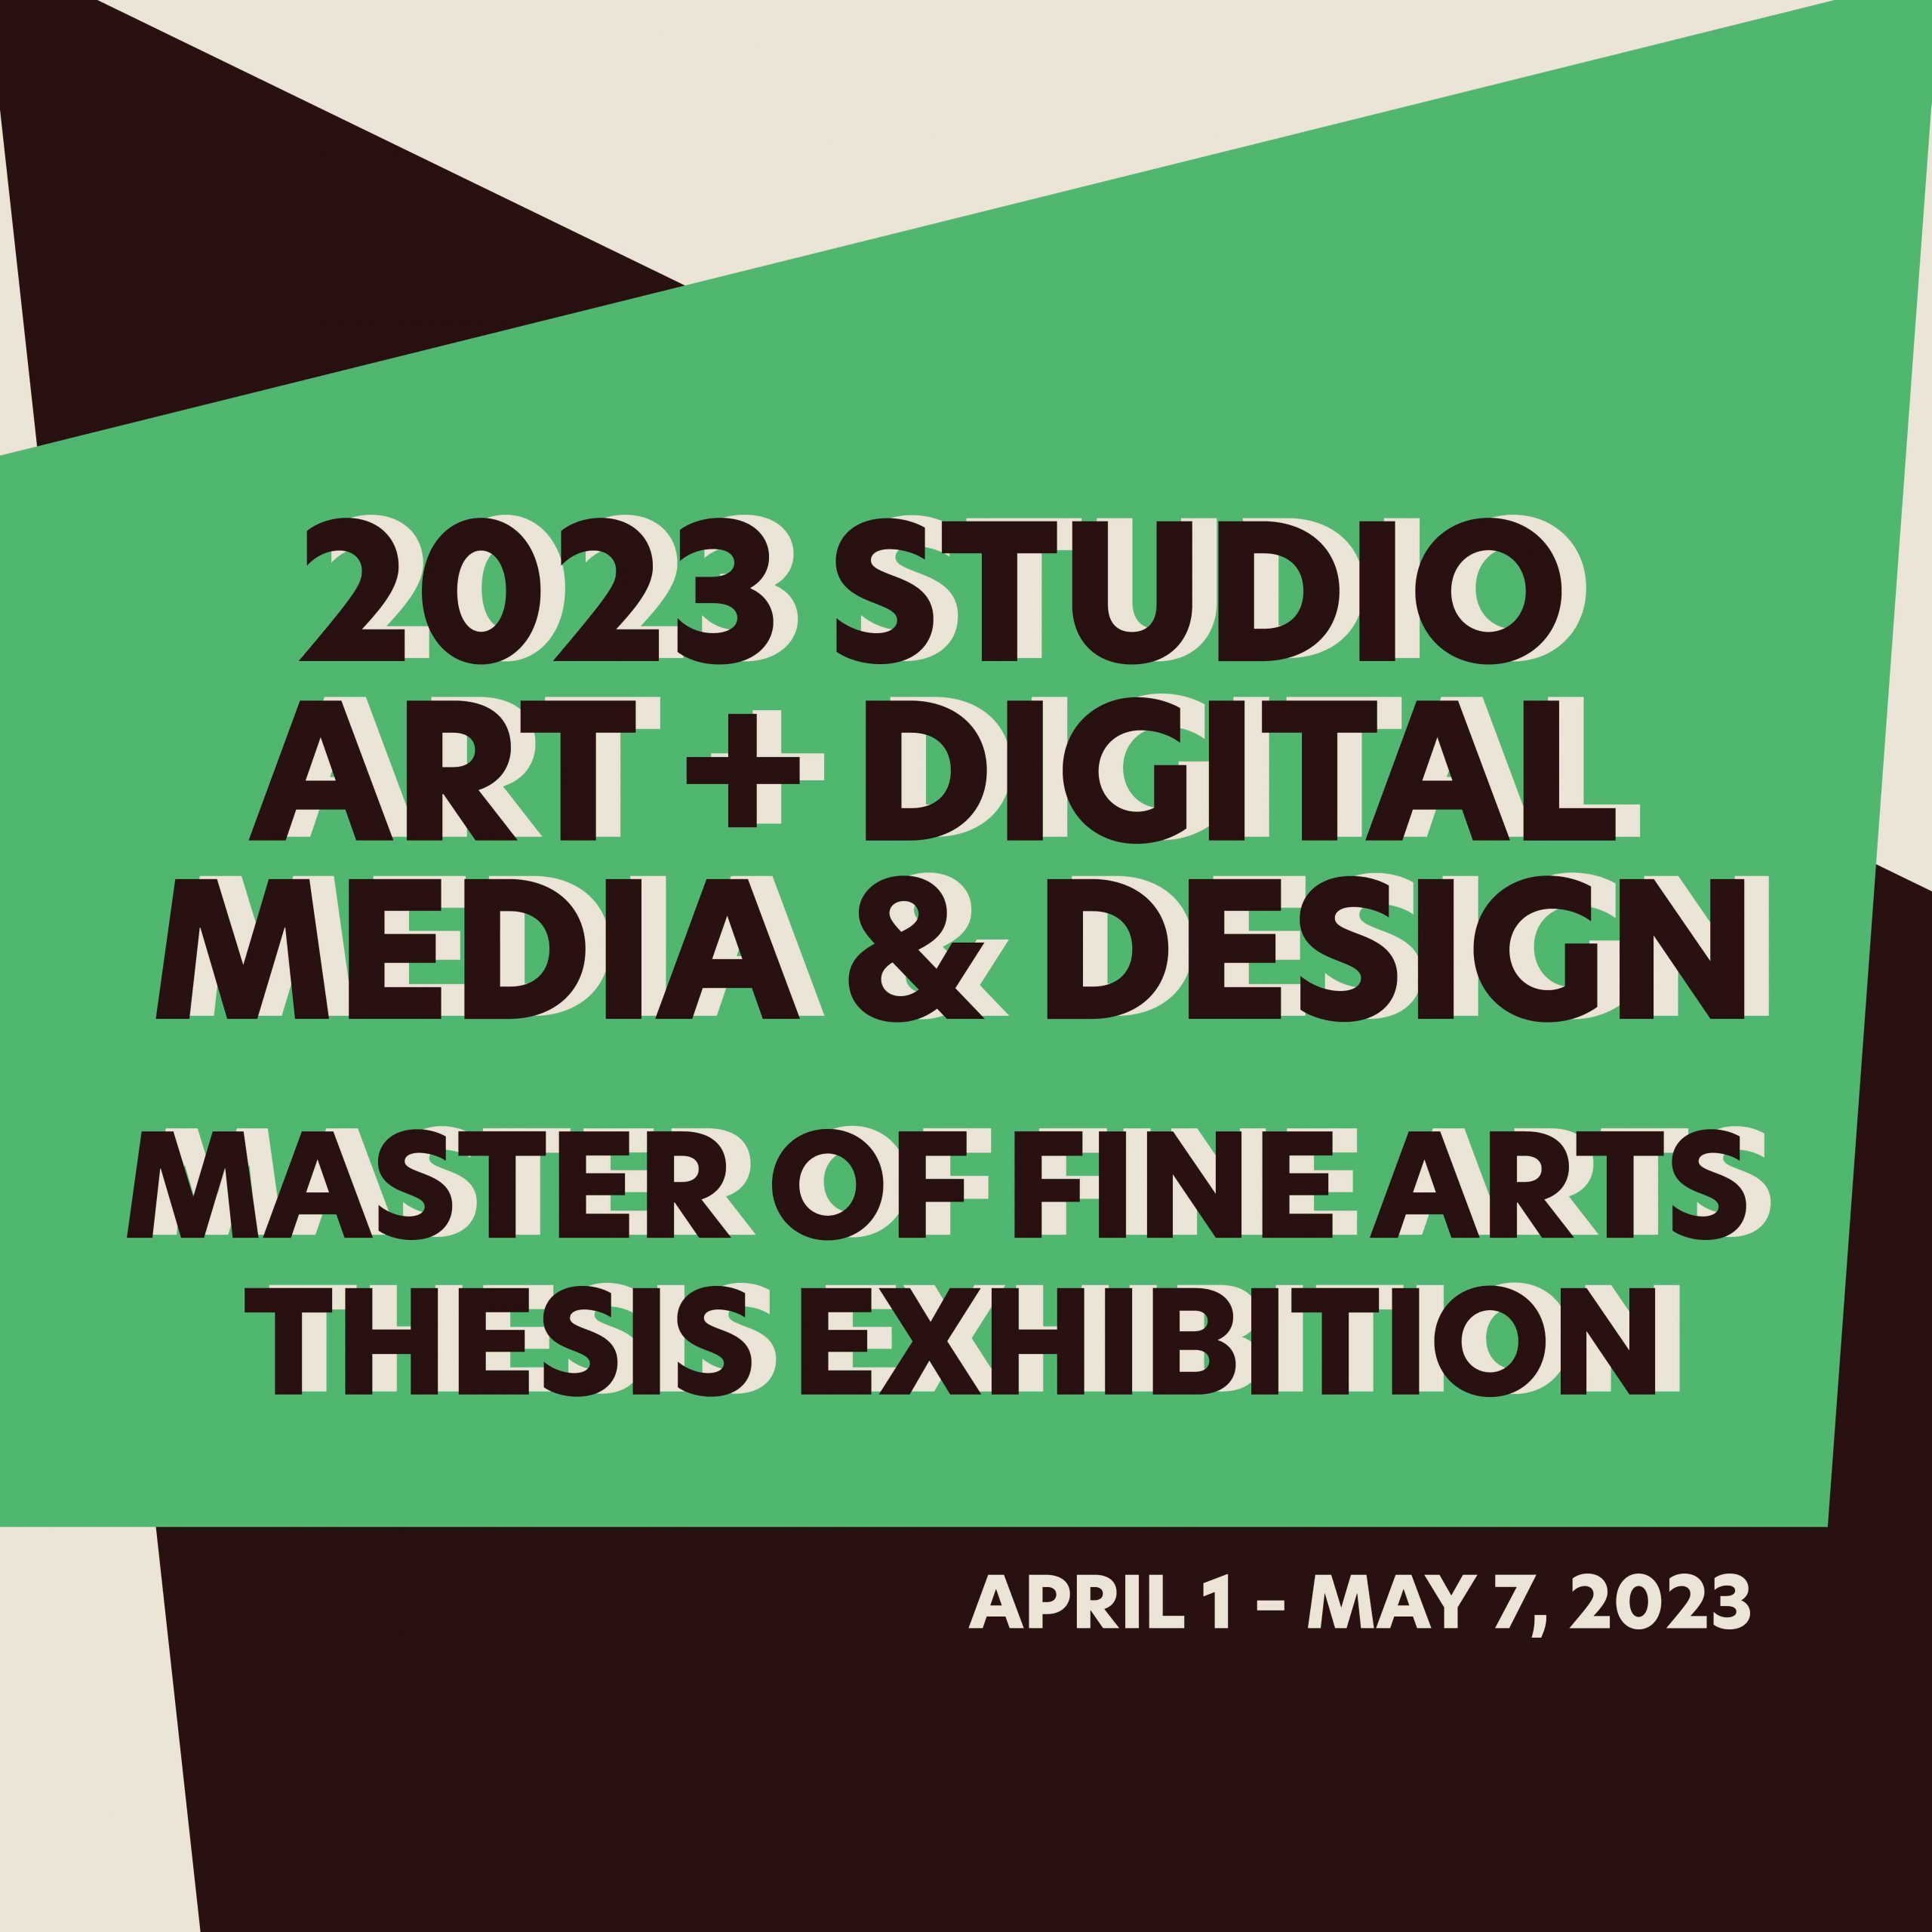 Cover image for "2023 Studio Art + Digital Media & Design Master of Fine Arts Thesis Exhibition"